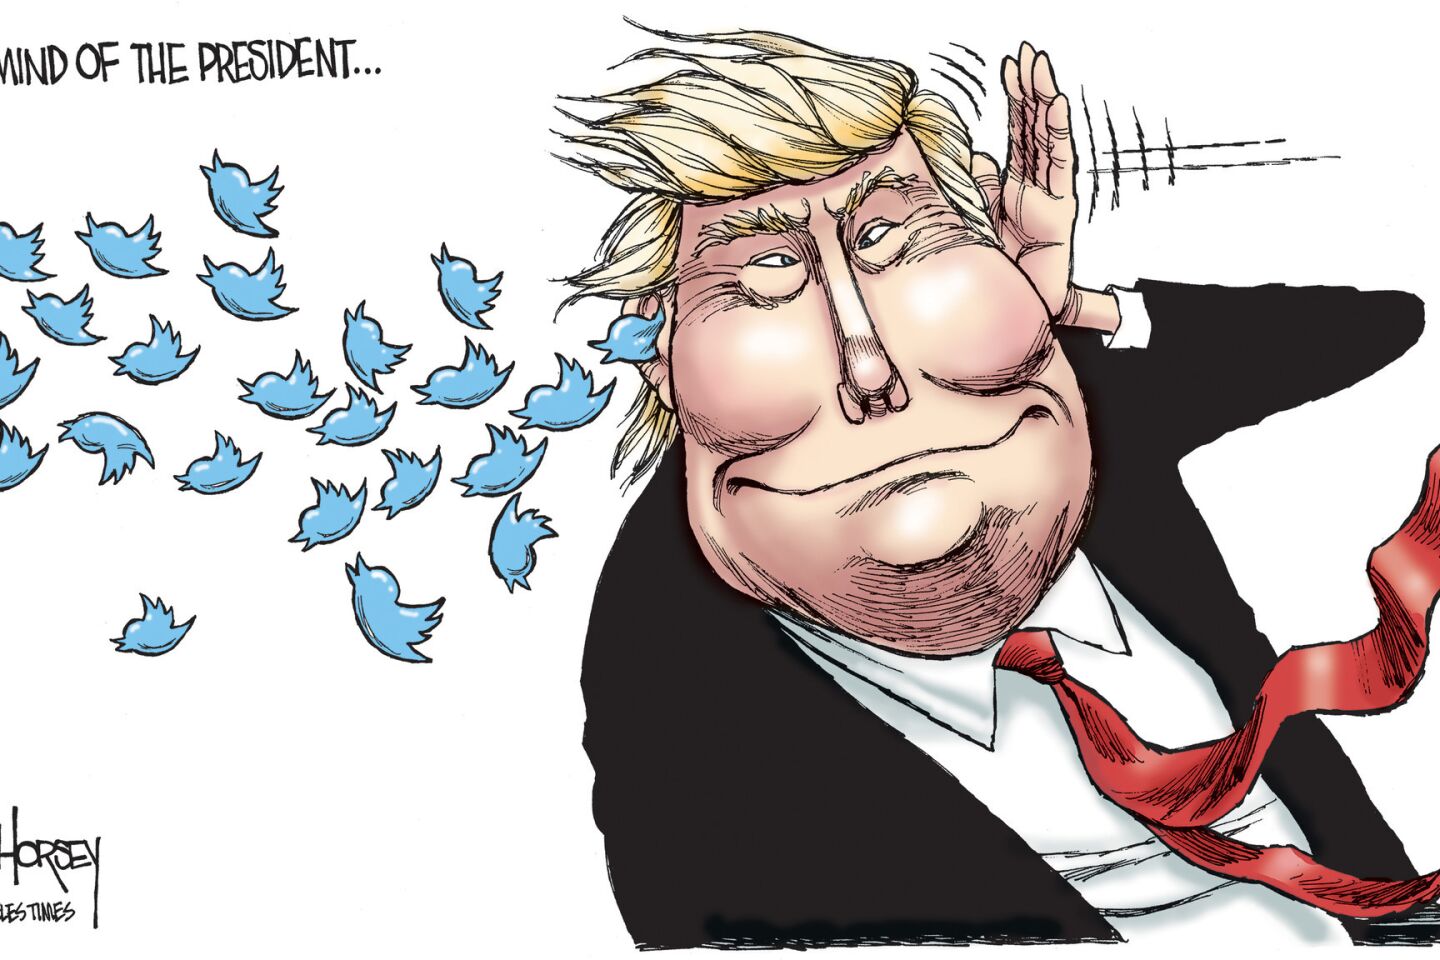 Donald Trump has tweets on the brain.